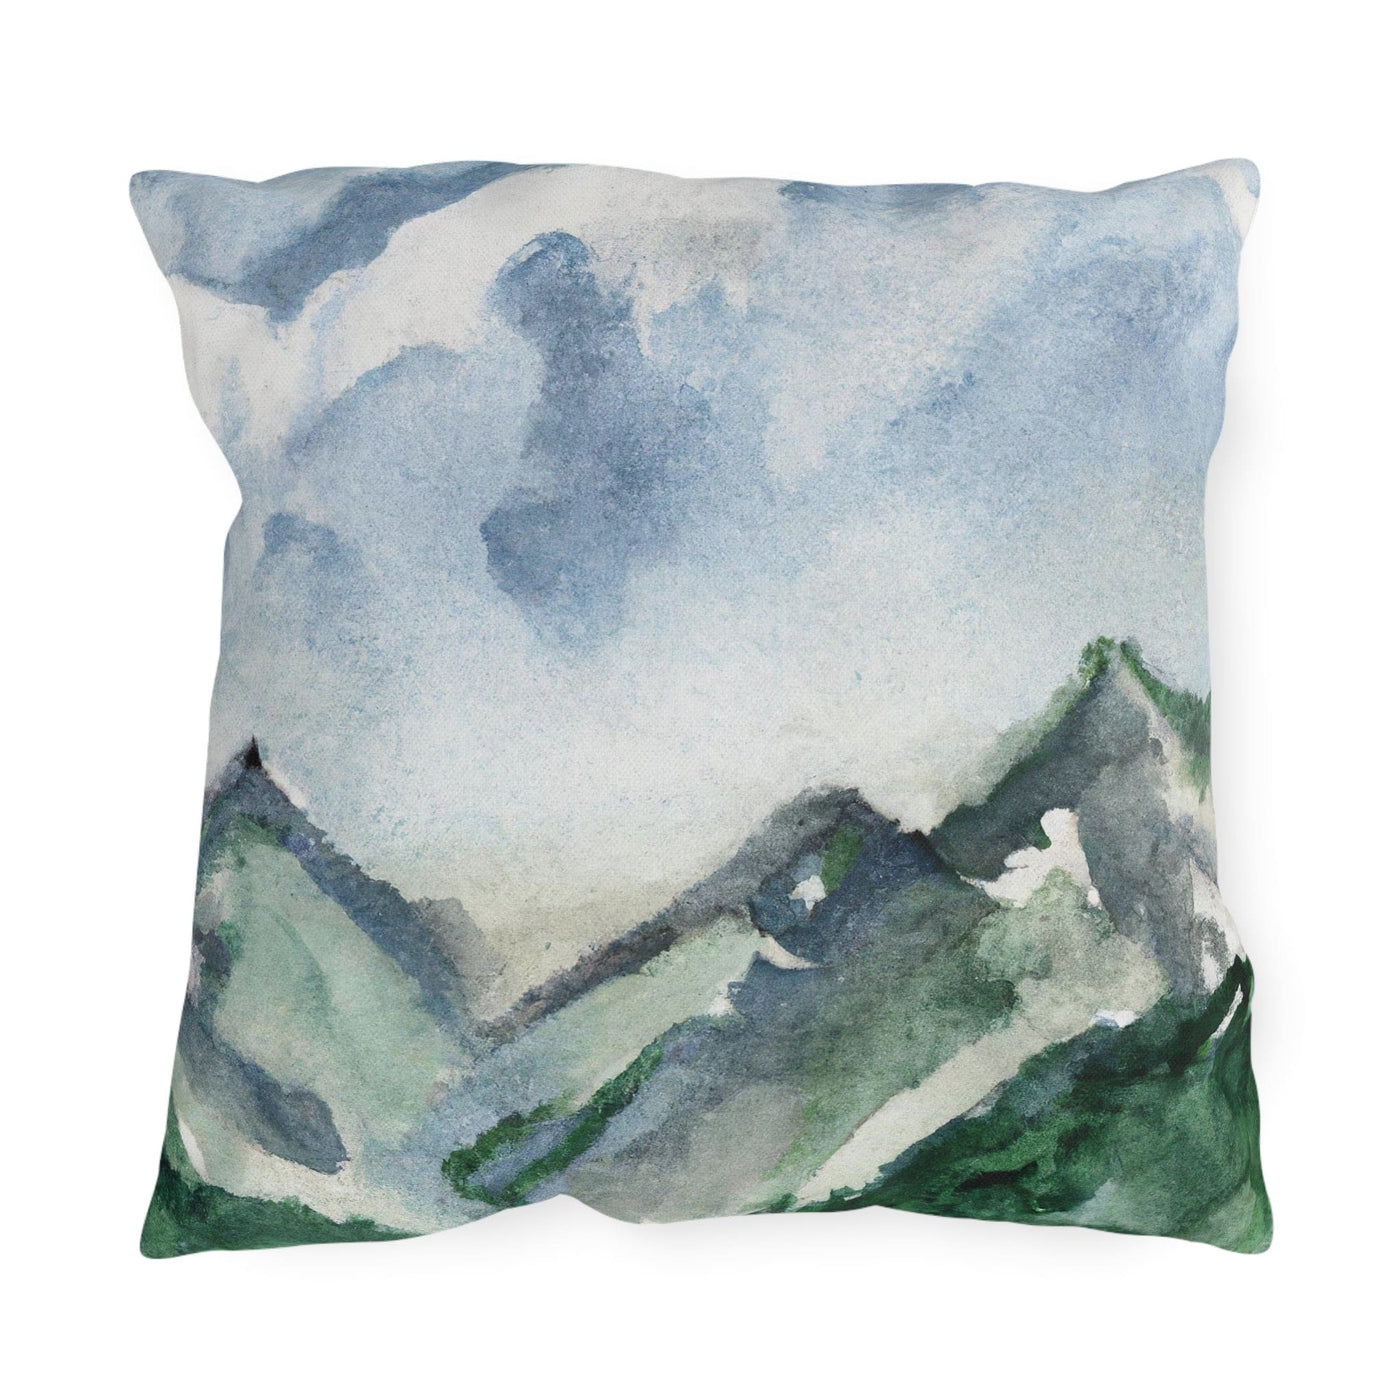 Decorative Outdoor Pillows With Zipper - Set Of 2 Green Mountainside Nature